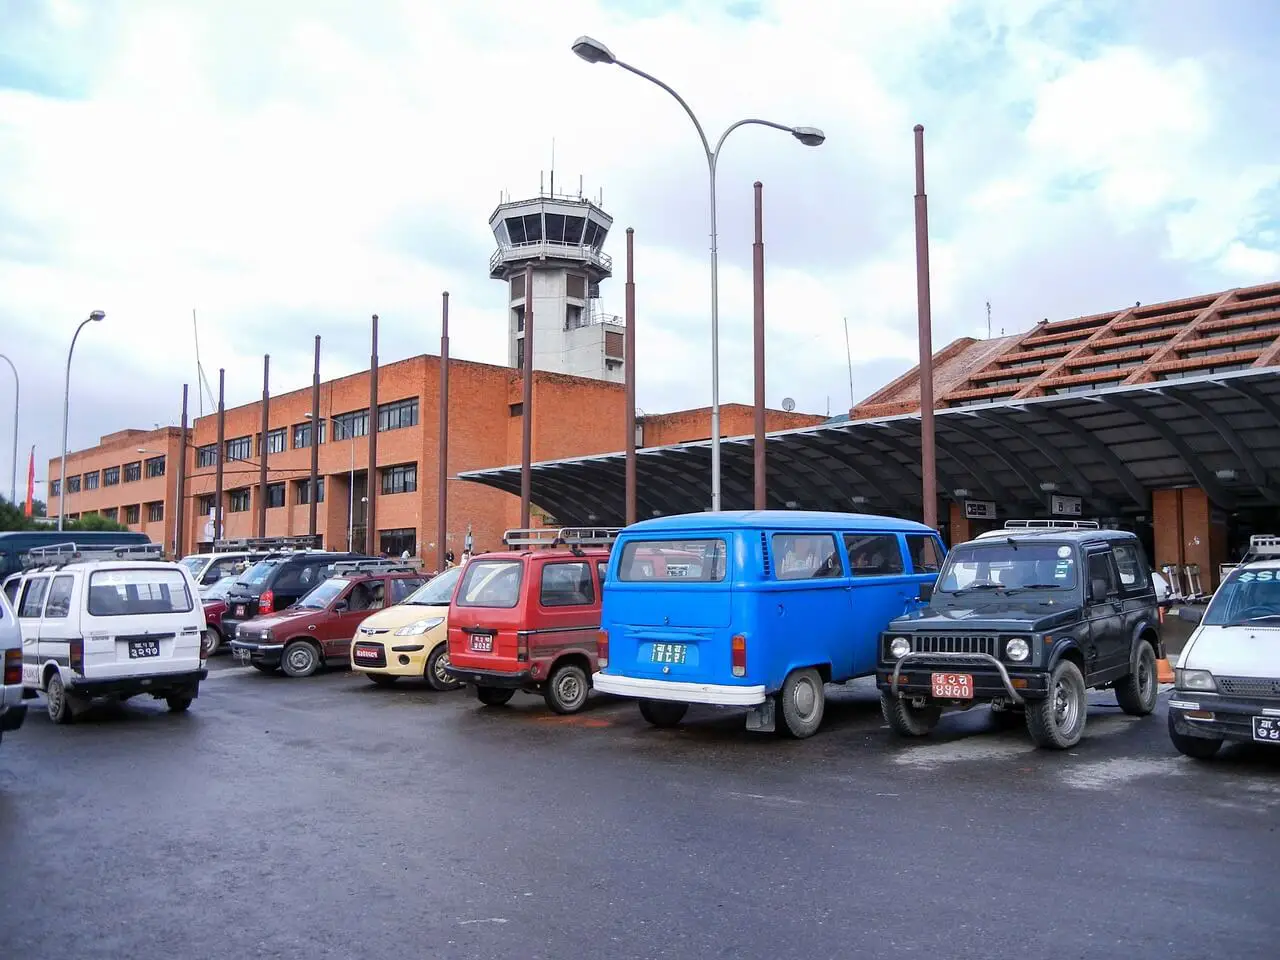 kathmandu airport